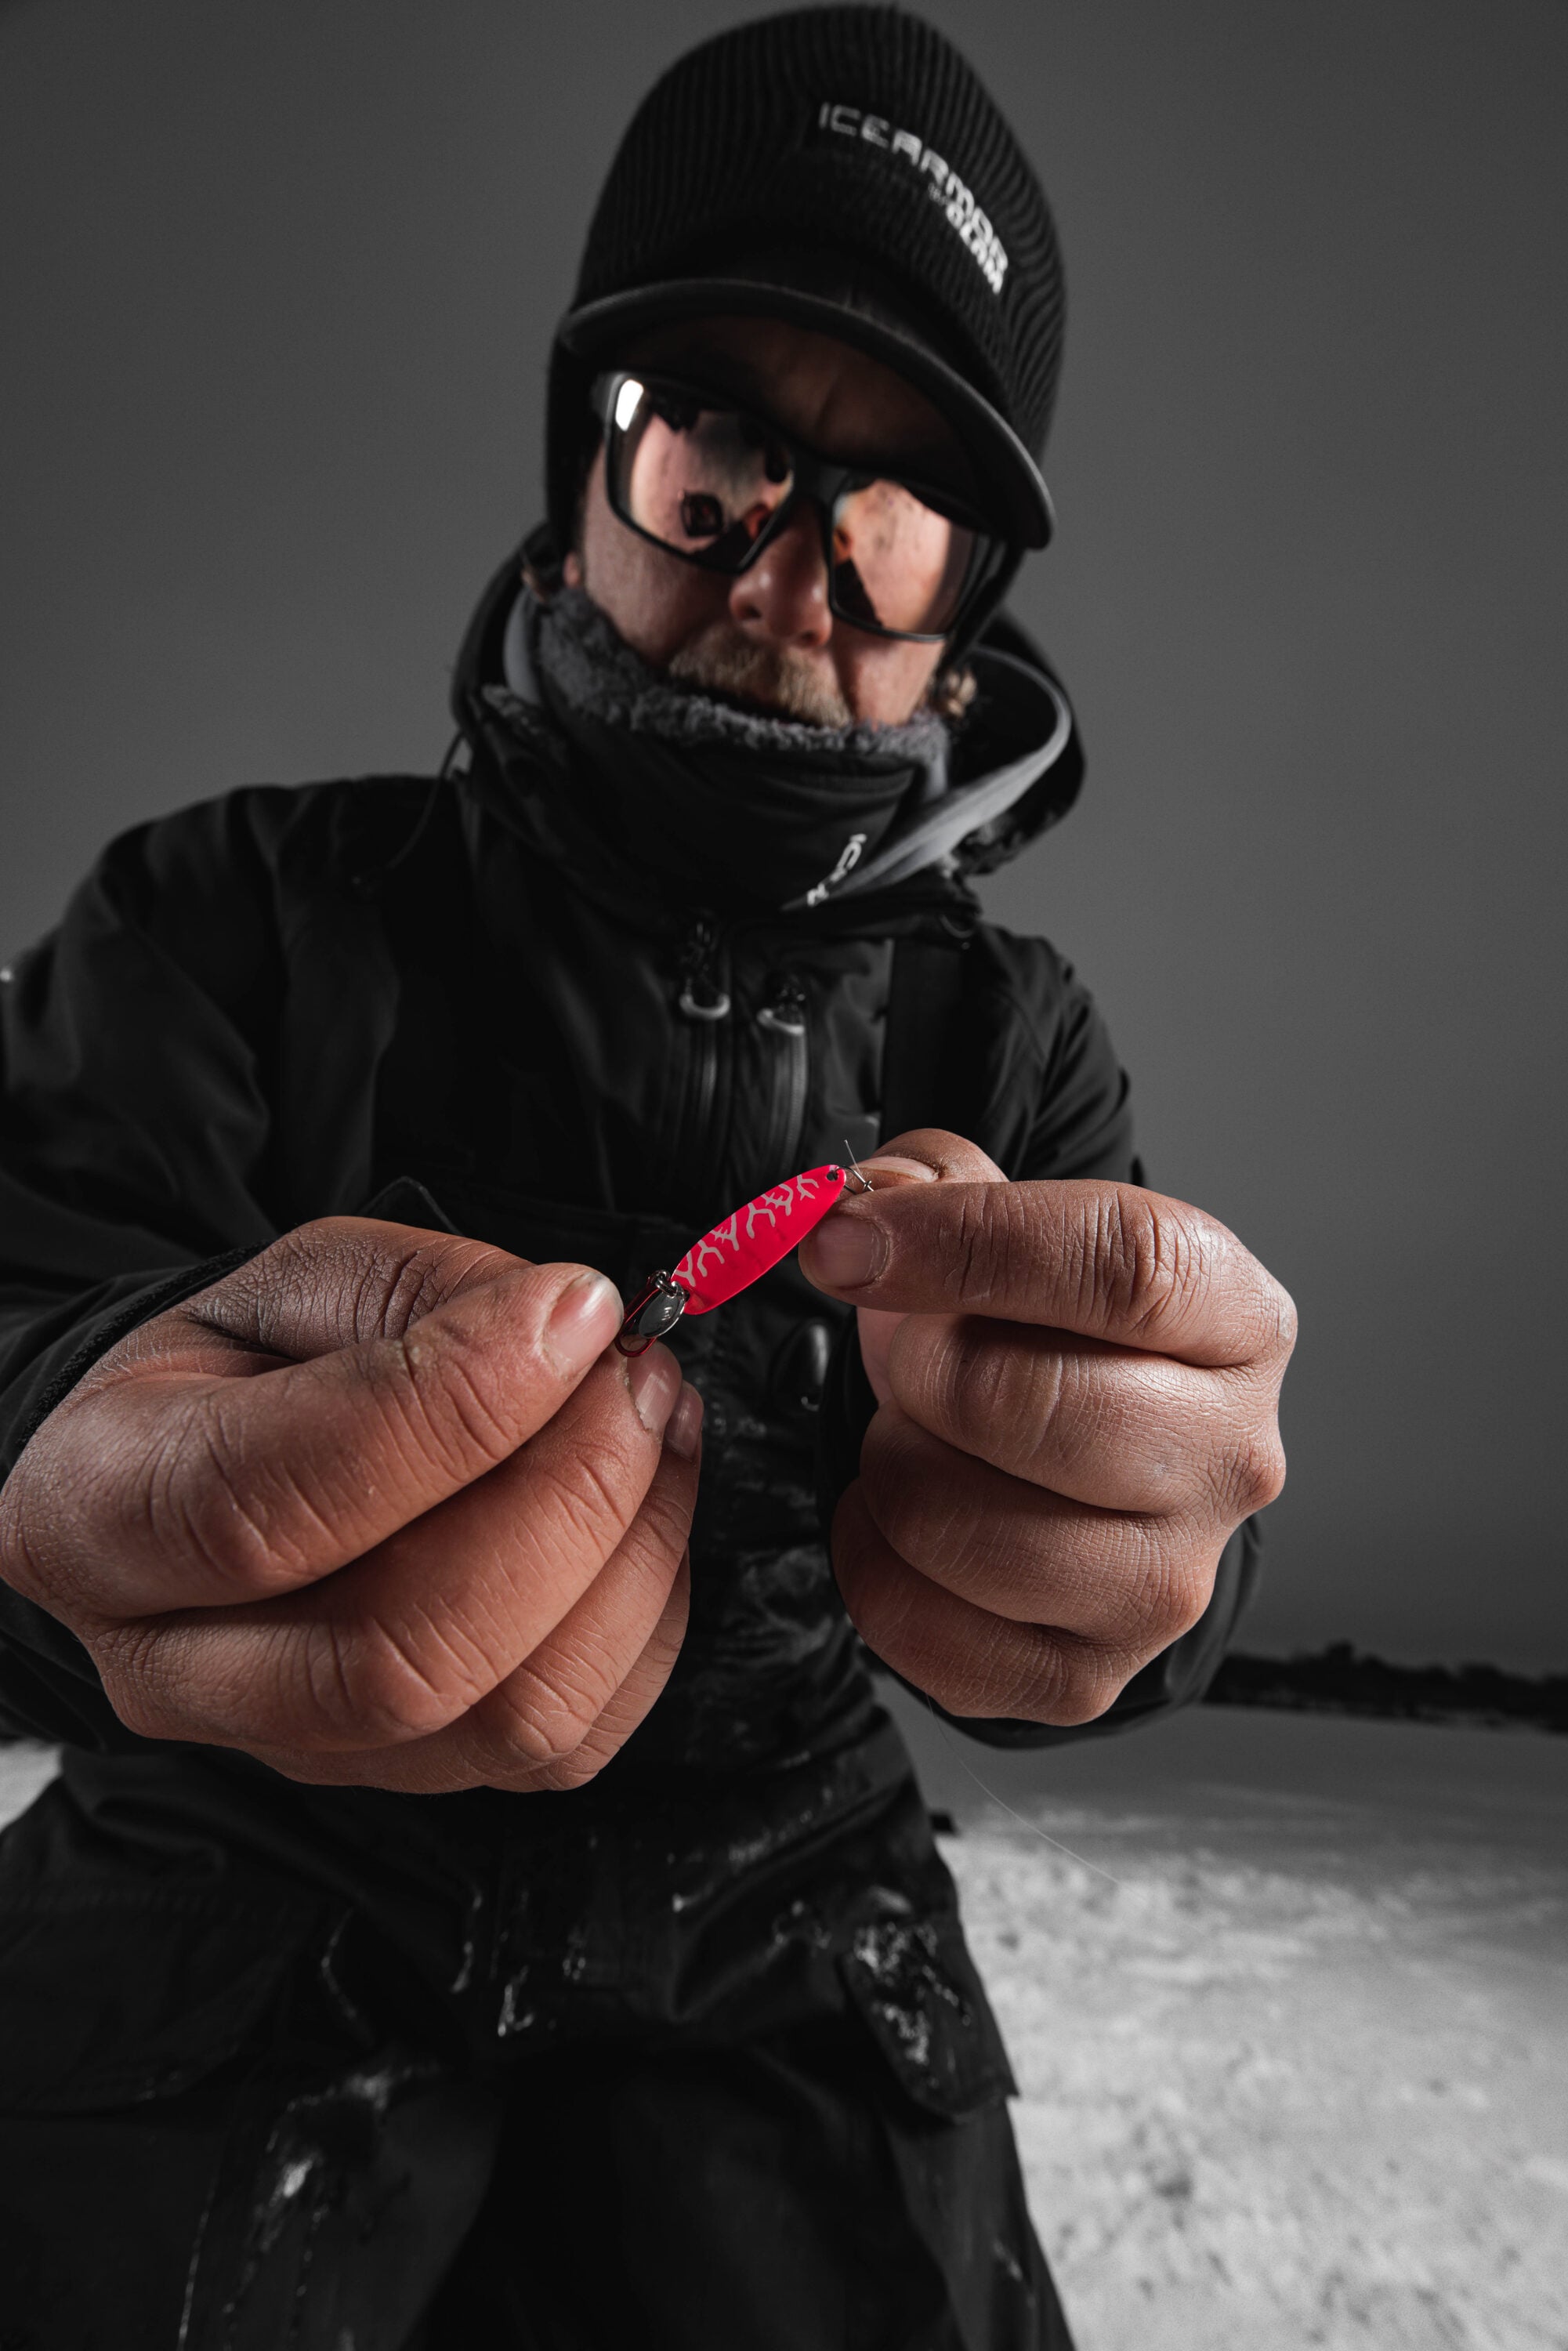 Clam Outdoors Edge Men's Ice Fishing Gloves - Black, L/XL